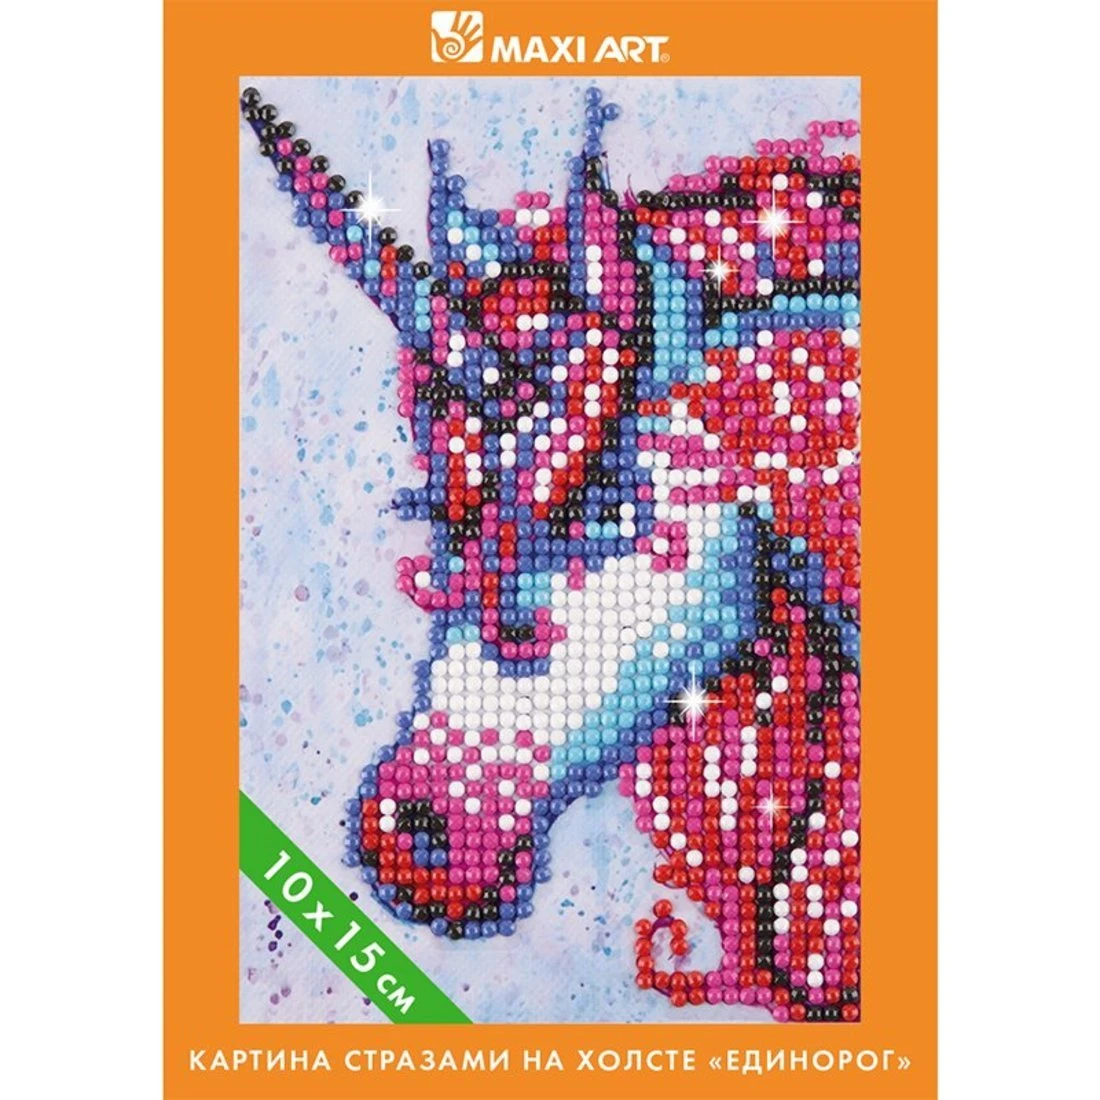 Картина стразами на холсте Maxi Art Единорог 10х15 см.